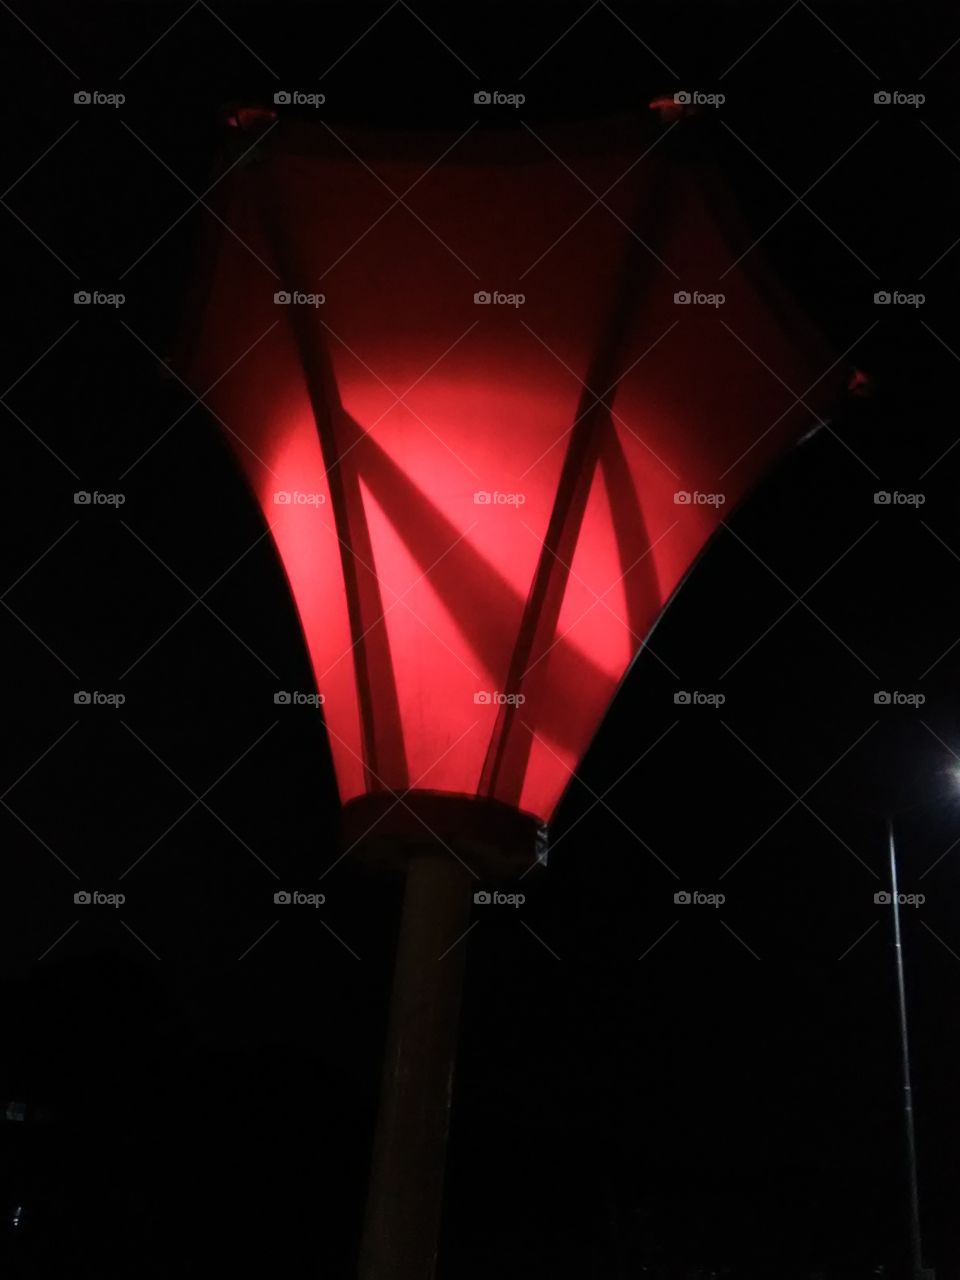 This is a very good garden light red light.